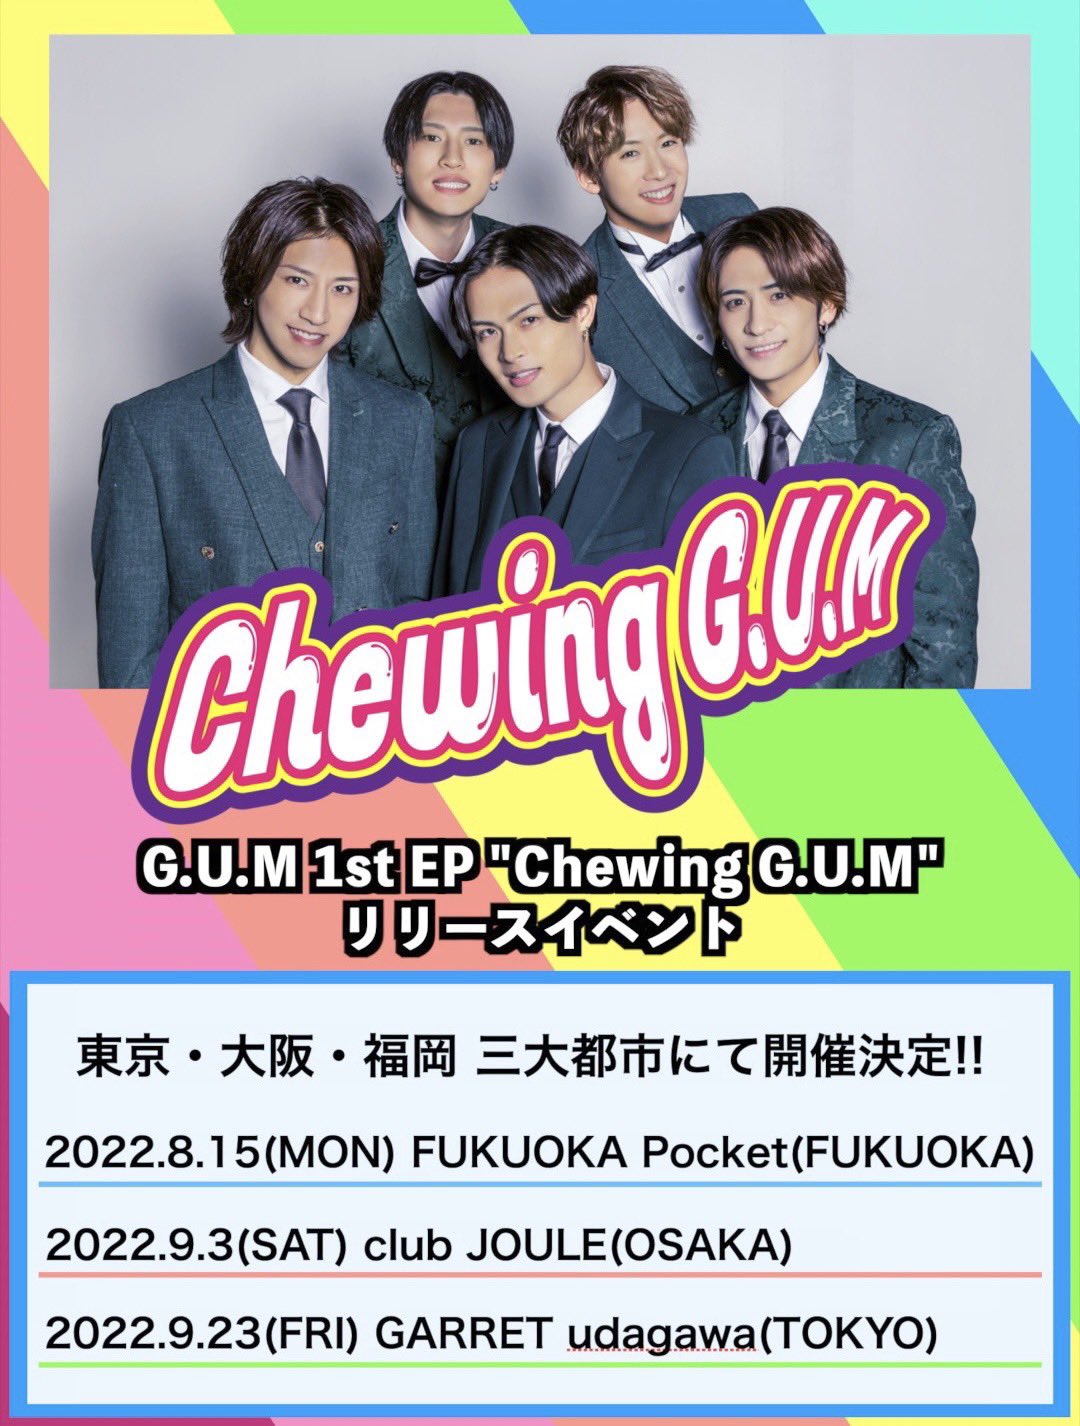 ＜GUMiCARD会員限定＞9/23  開催 G.U.M 1st EP "Chewing G.U.M"  リリースイベント @ 東京 GARRET udagawa